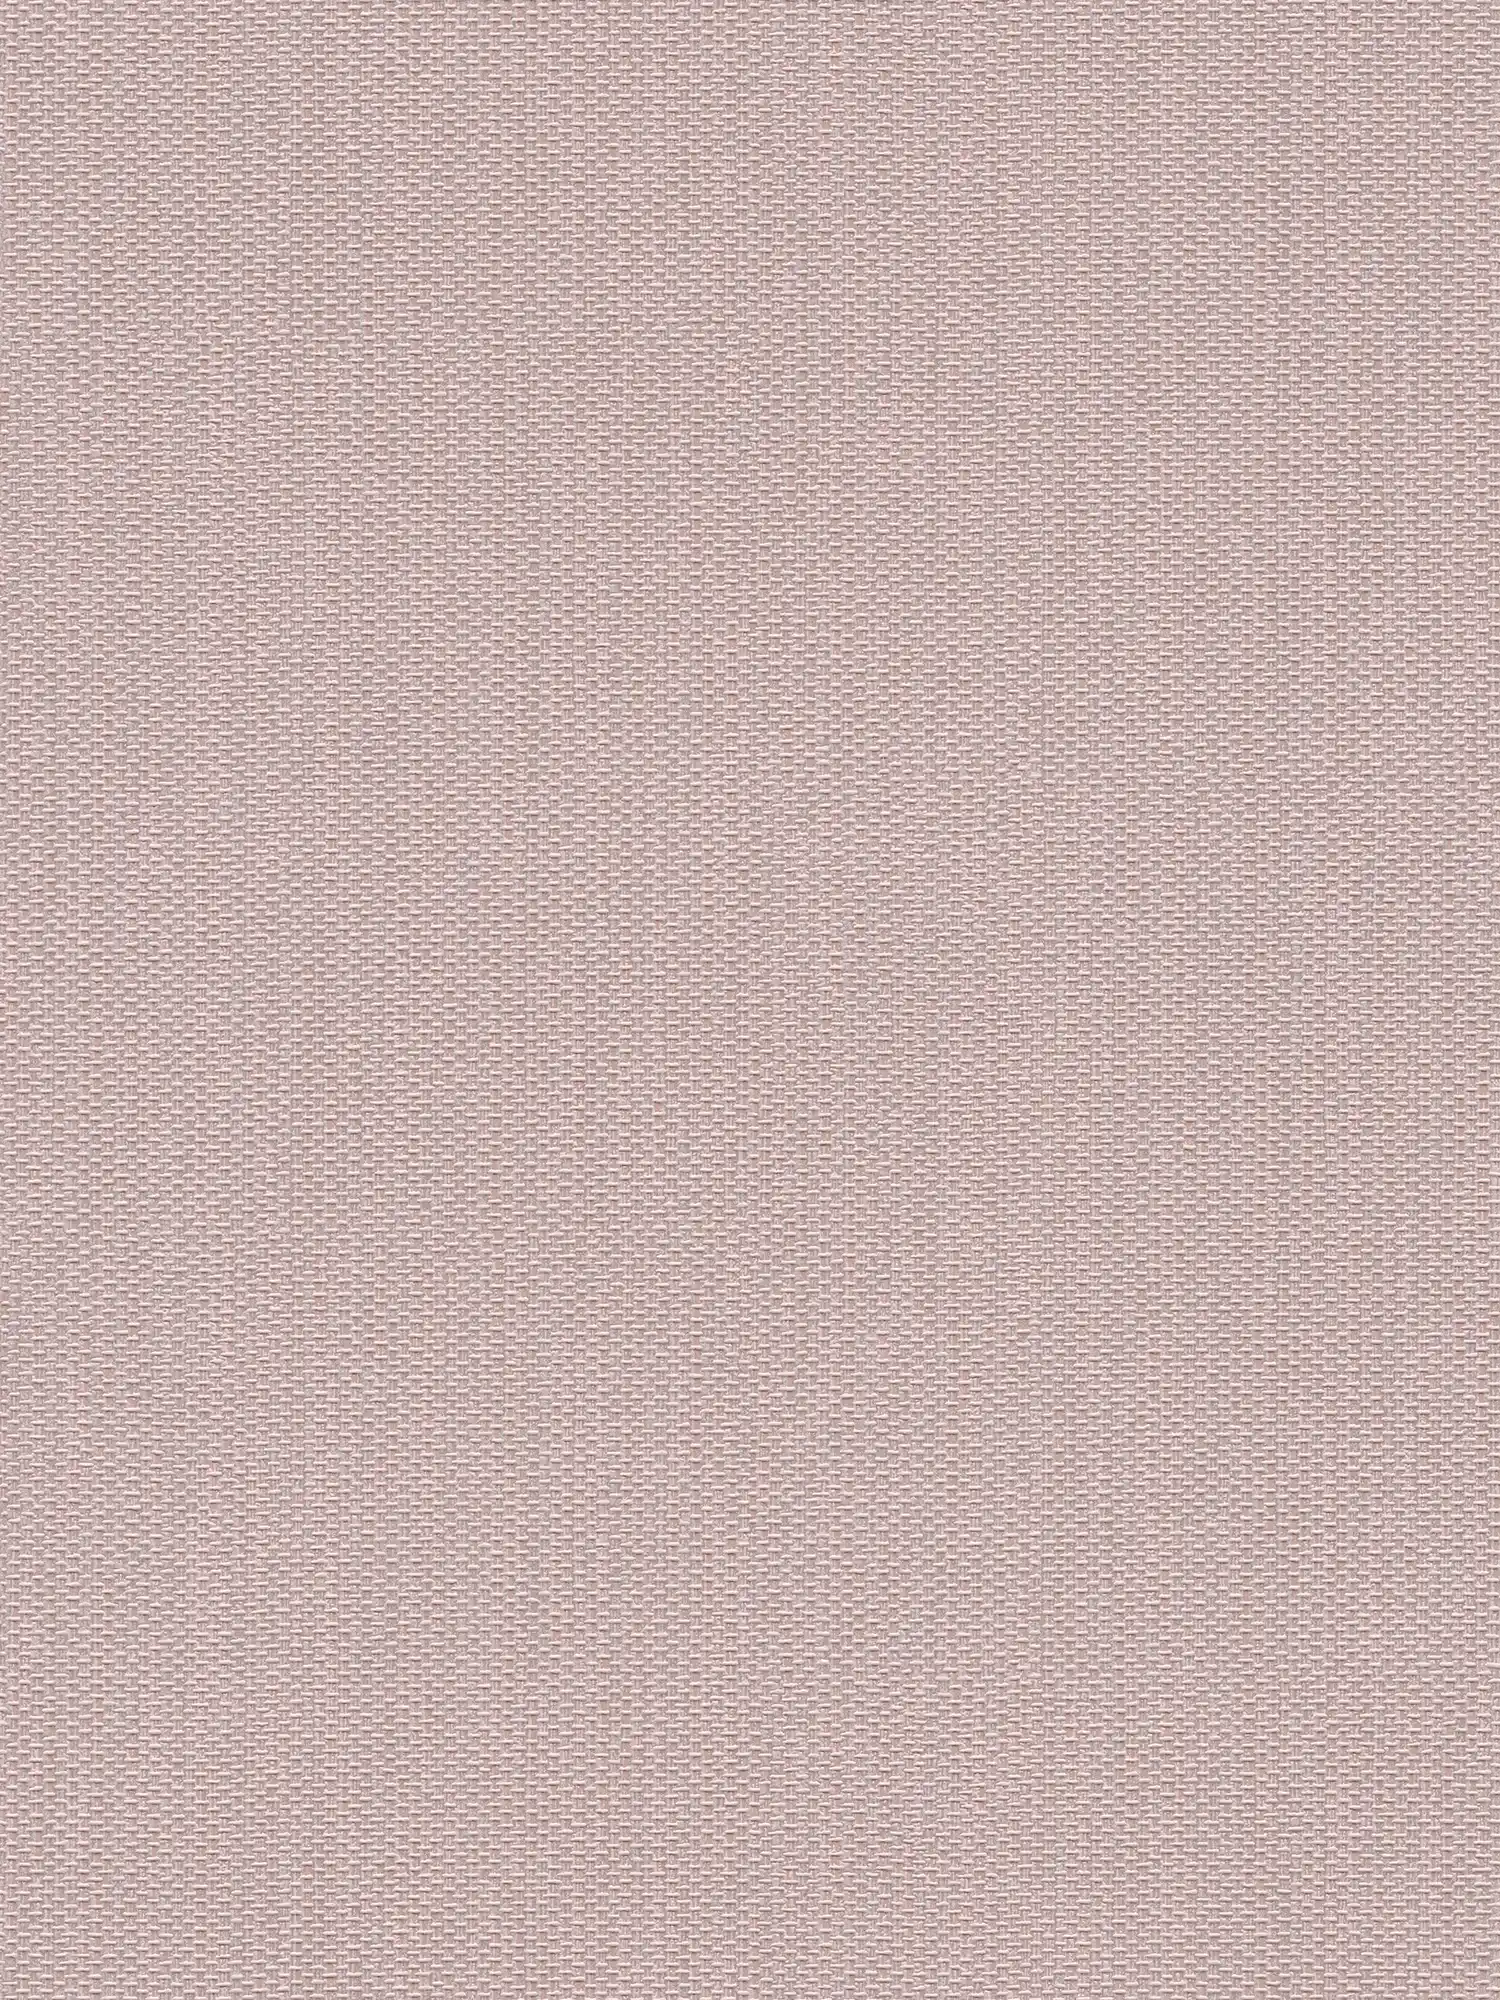 Strukturierte Vliestapete in Textiloptik – Rosa, Silber
